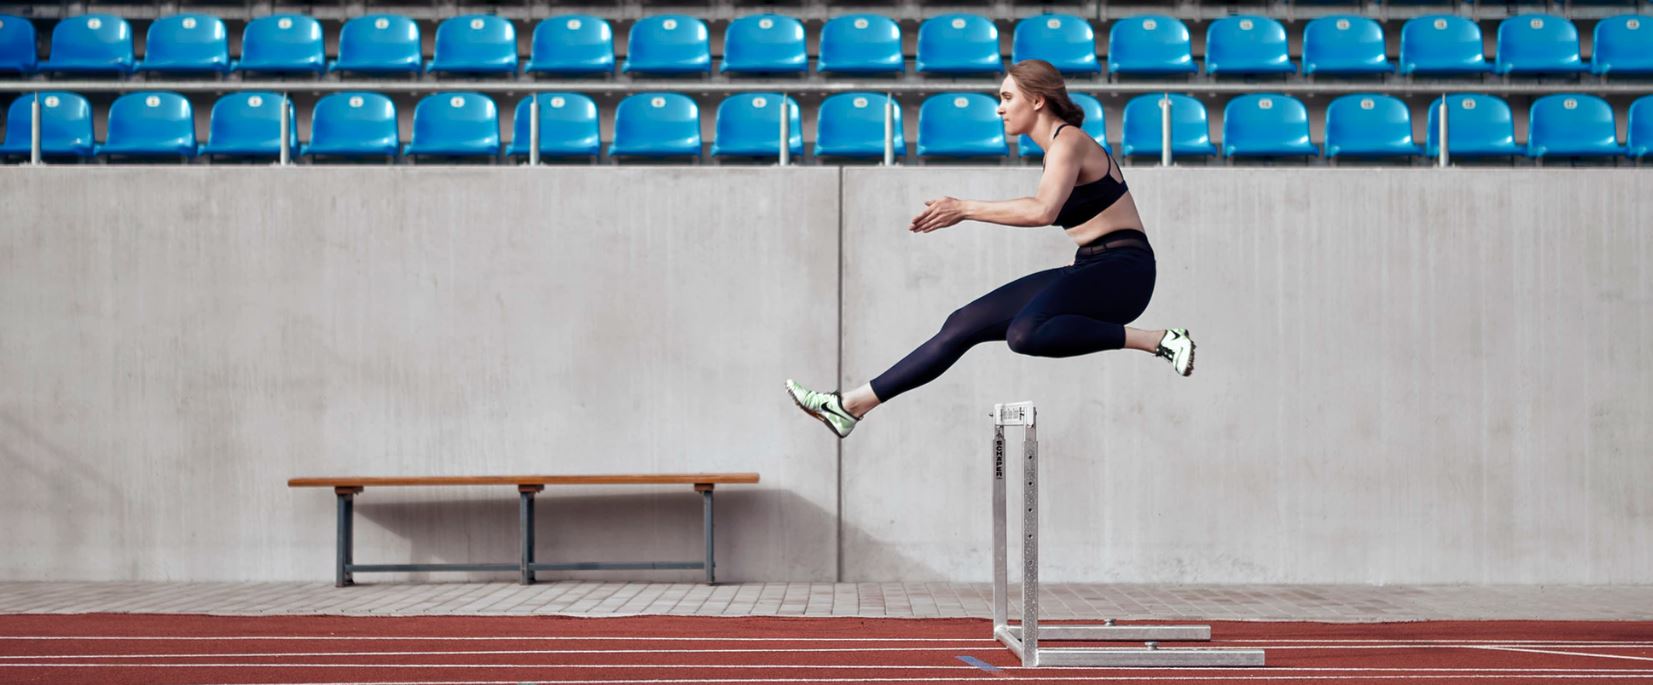 overcoming hurdles